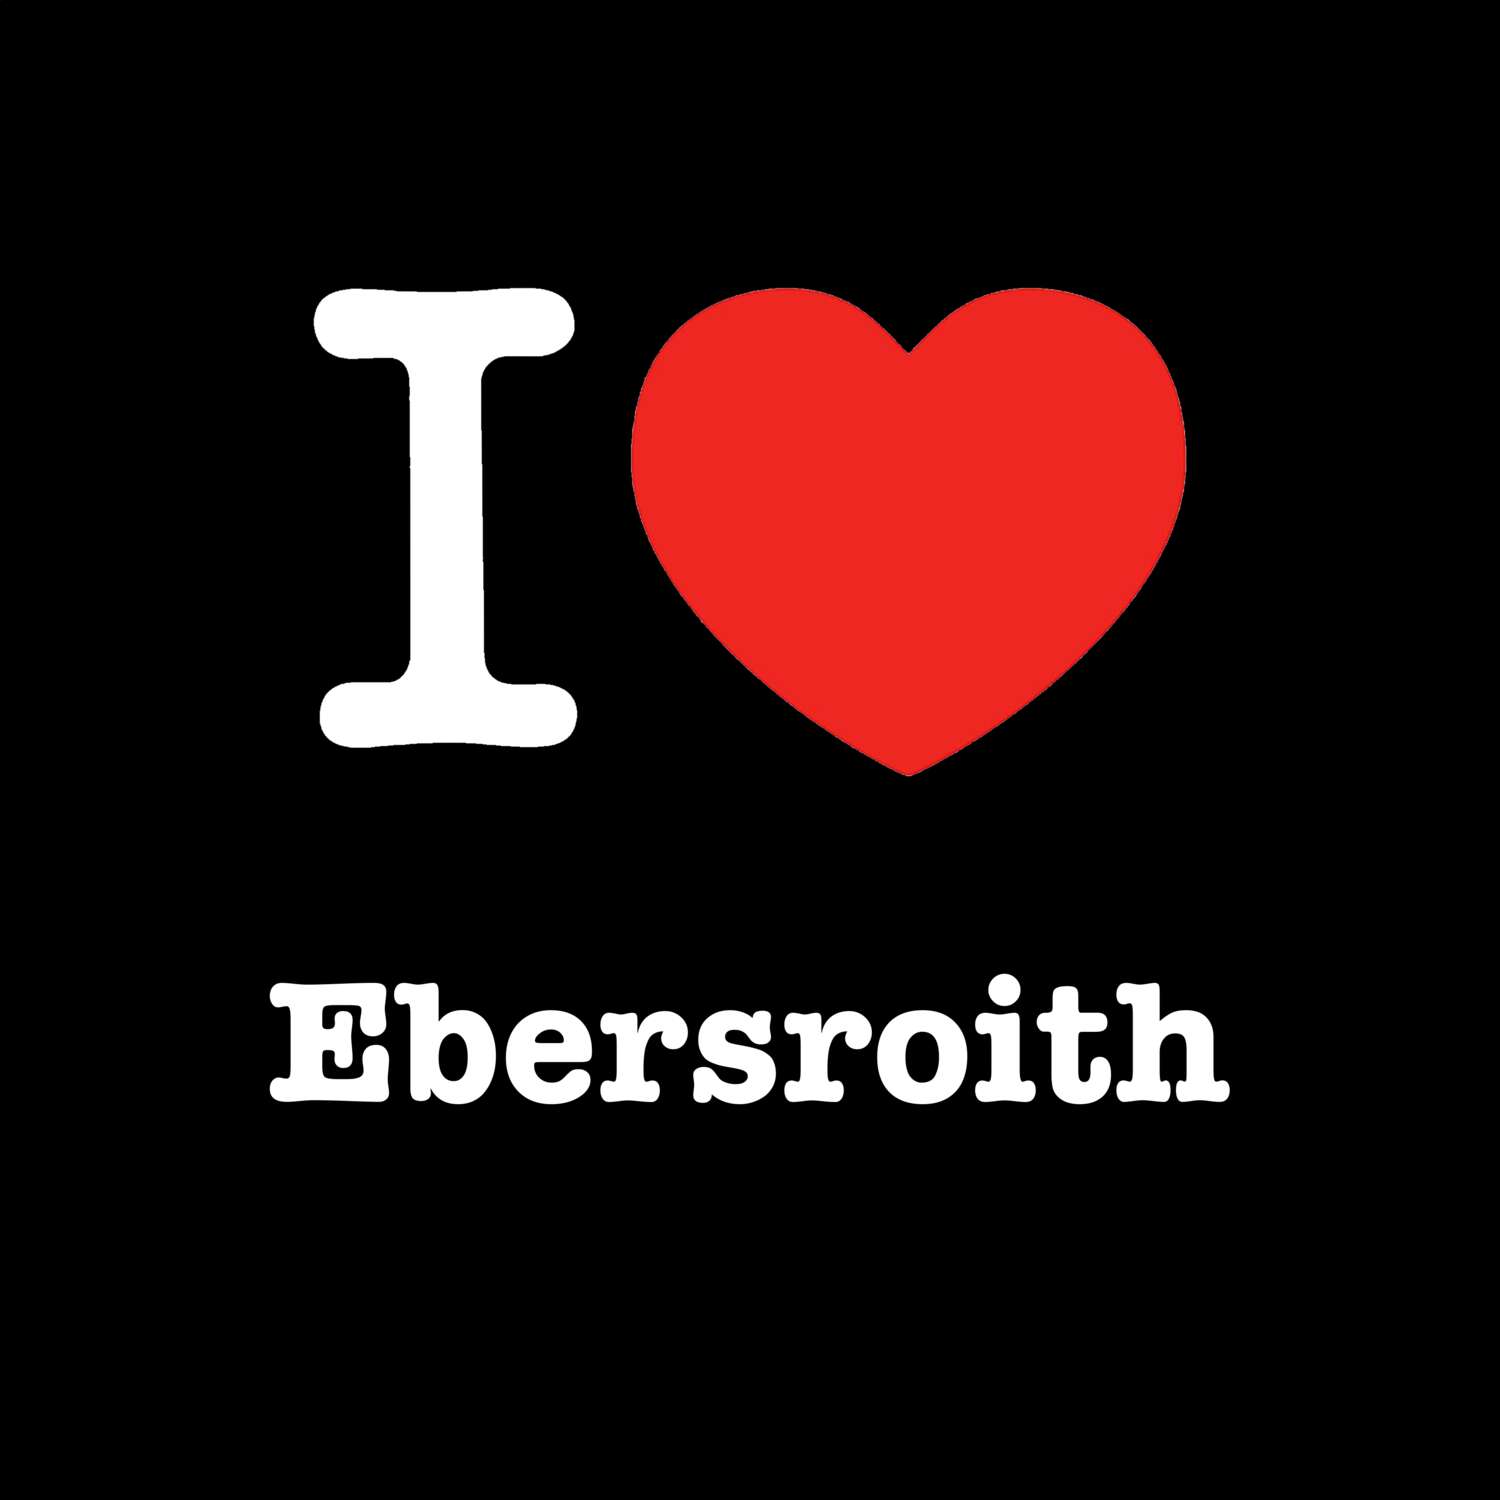 Ebersroith T-Shirt »I love«